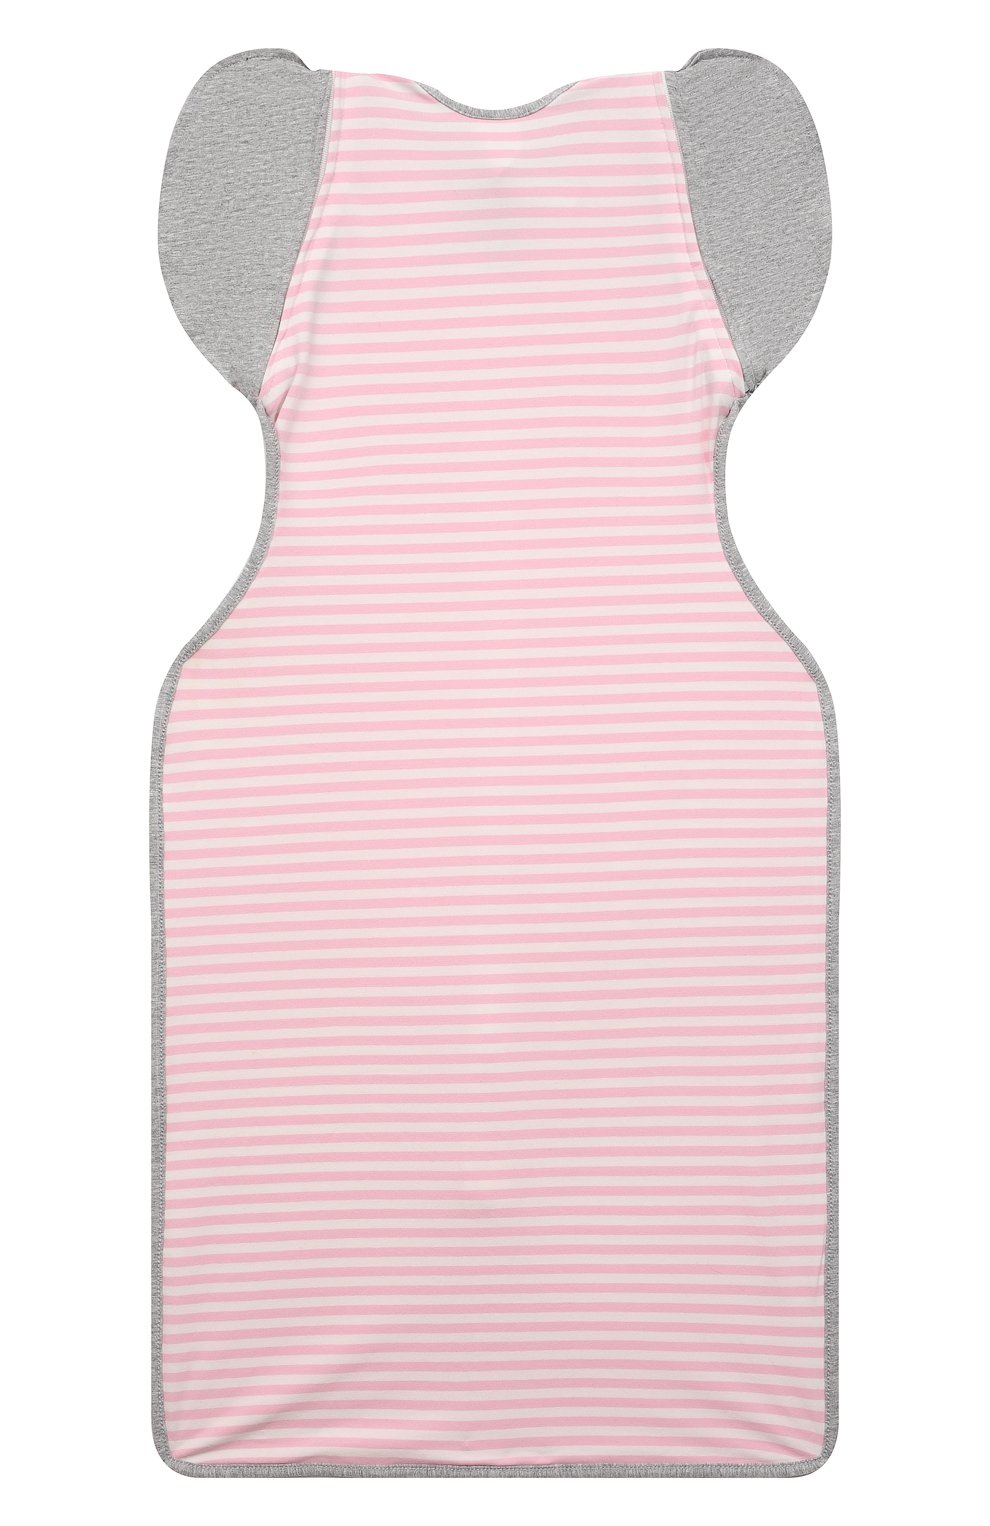 Детский комбинезон-мешок переходного этапа LOVE TO DREAM розового цвета, арт. L20 01 002 PK XL | Фото 2 (Материал внешний: Хлопок)